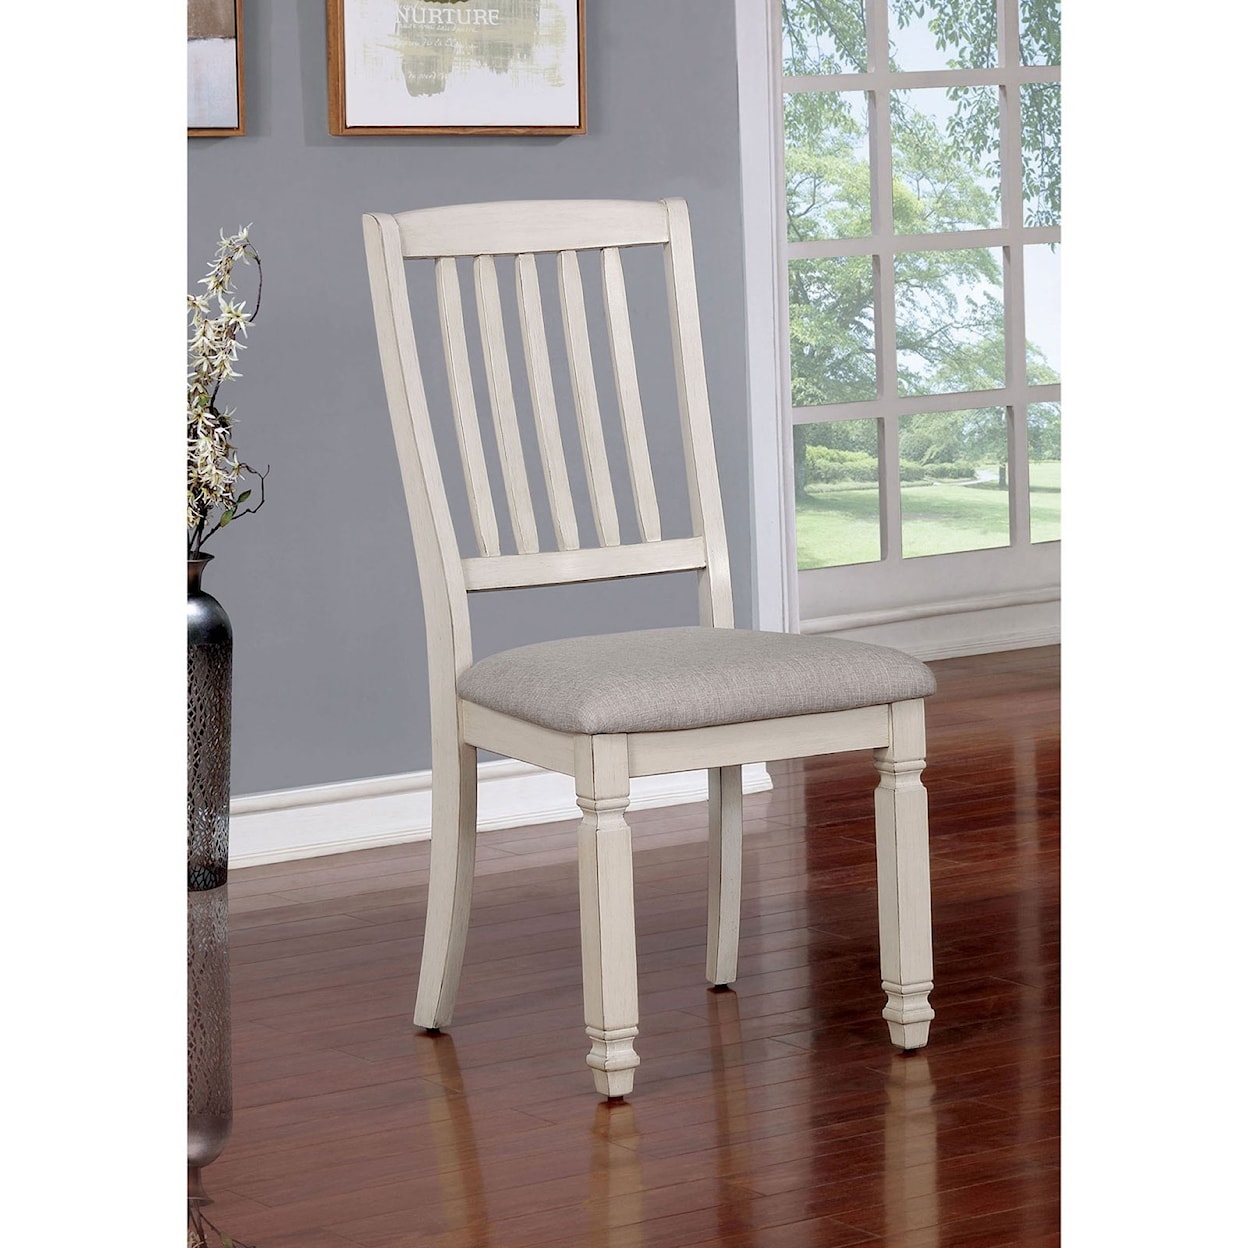 Furniture of America Kaliyah Set of 2 Side Chairs